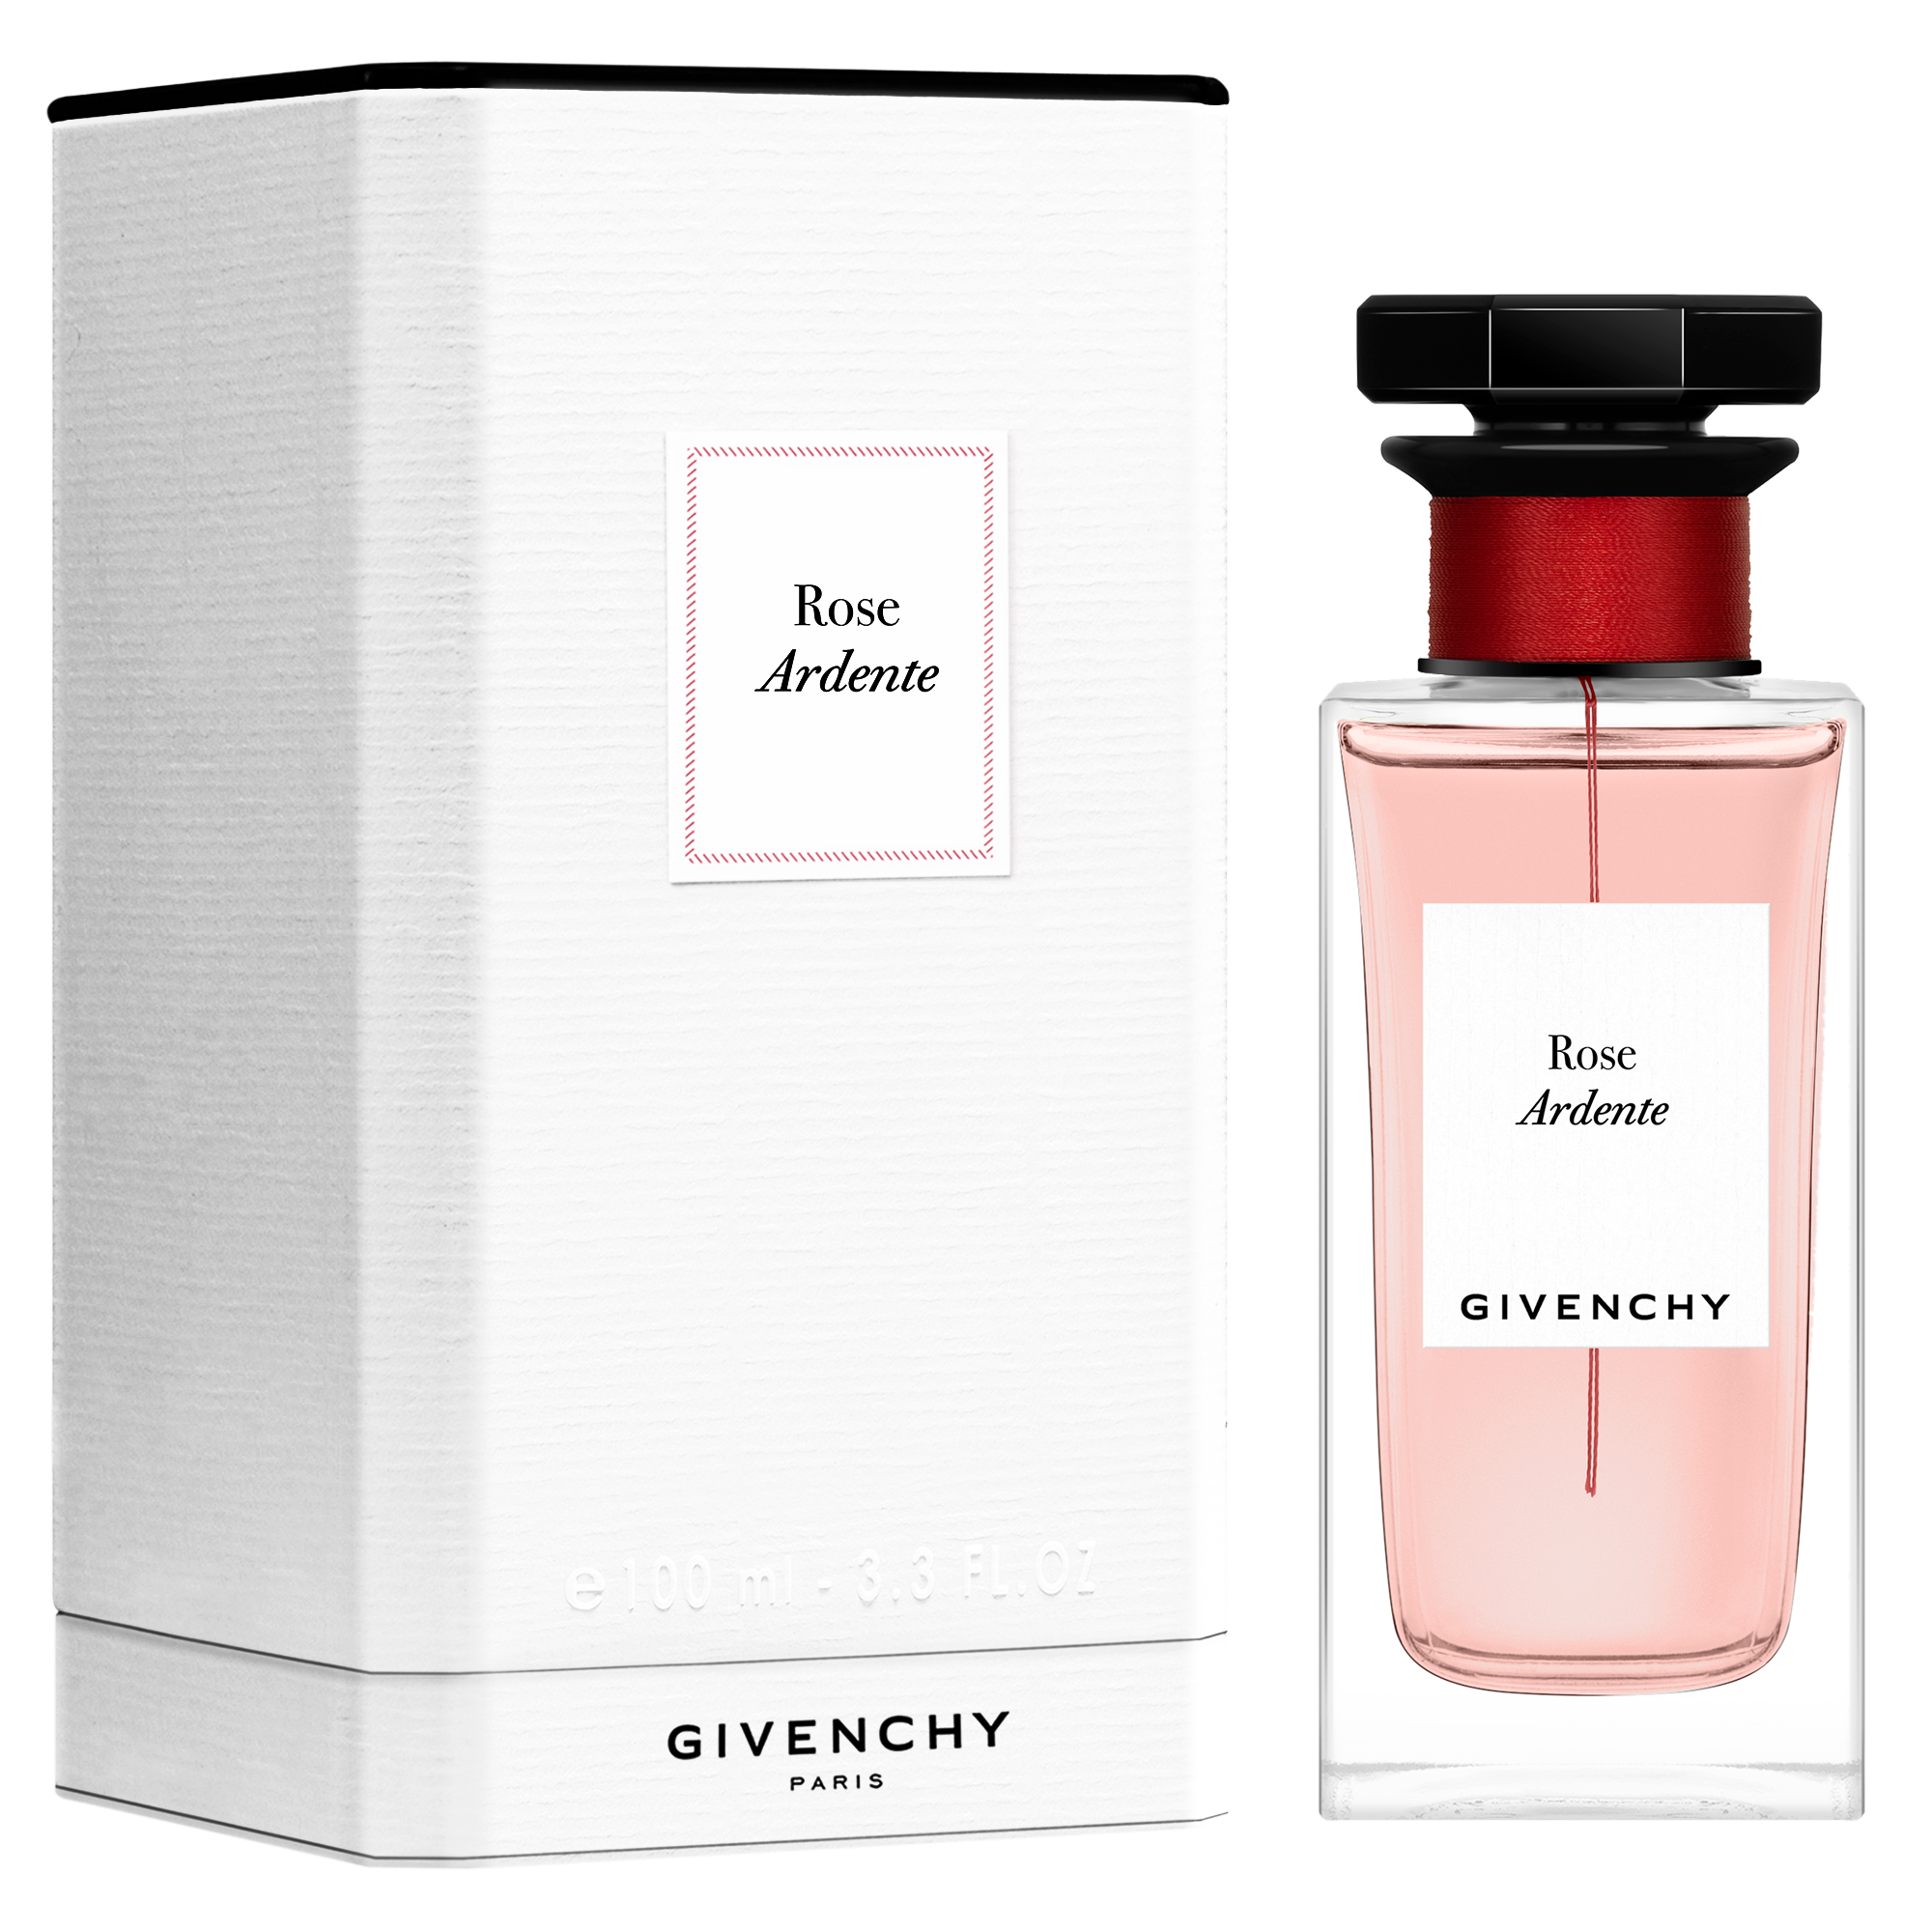 givenchy rose parfum